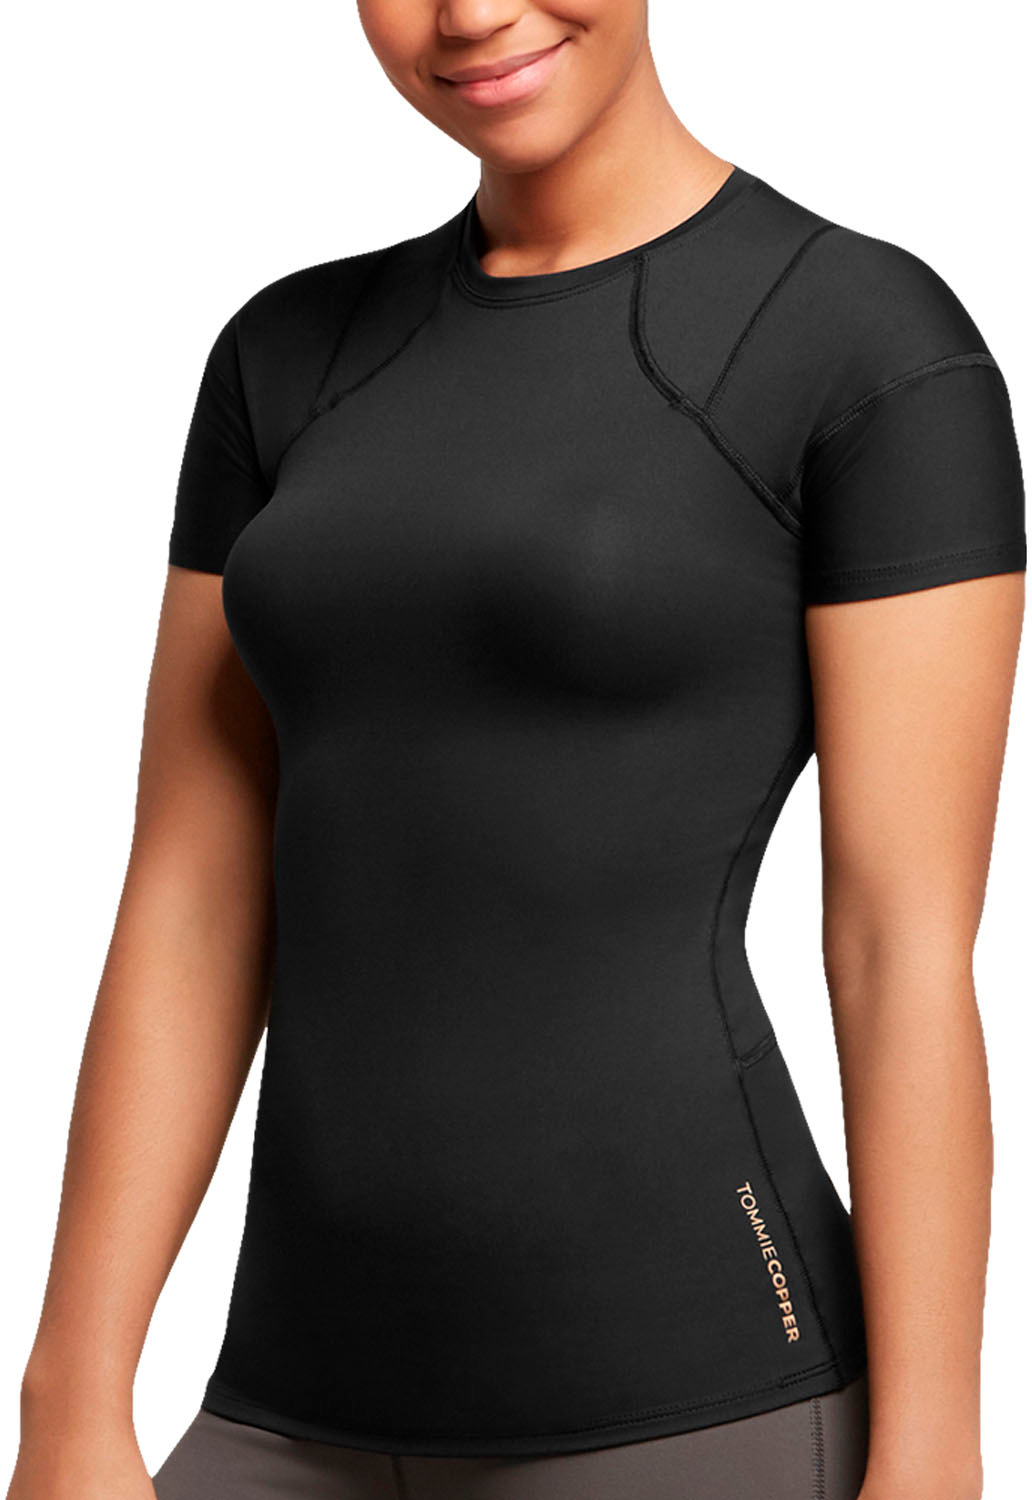 Tommie Copper Women's Short Sleeve Shoulder Shirt Black 0977WR